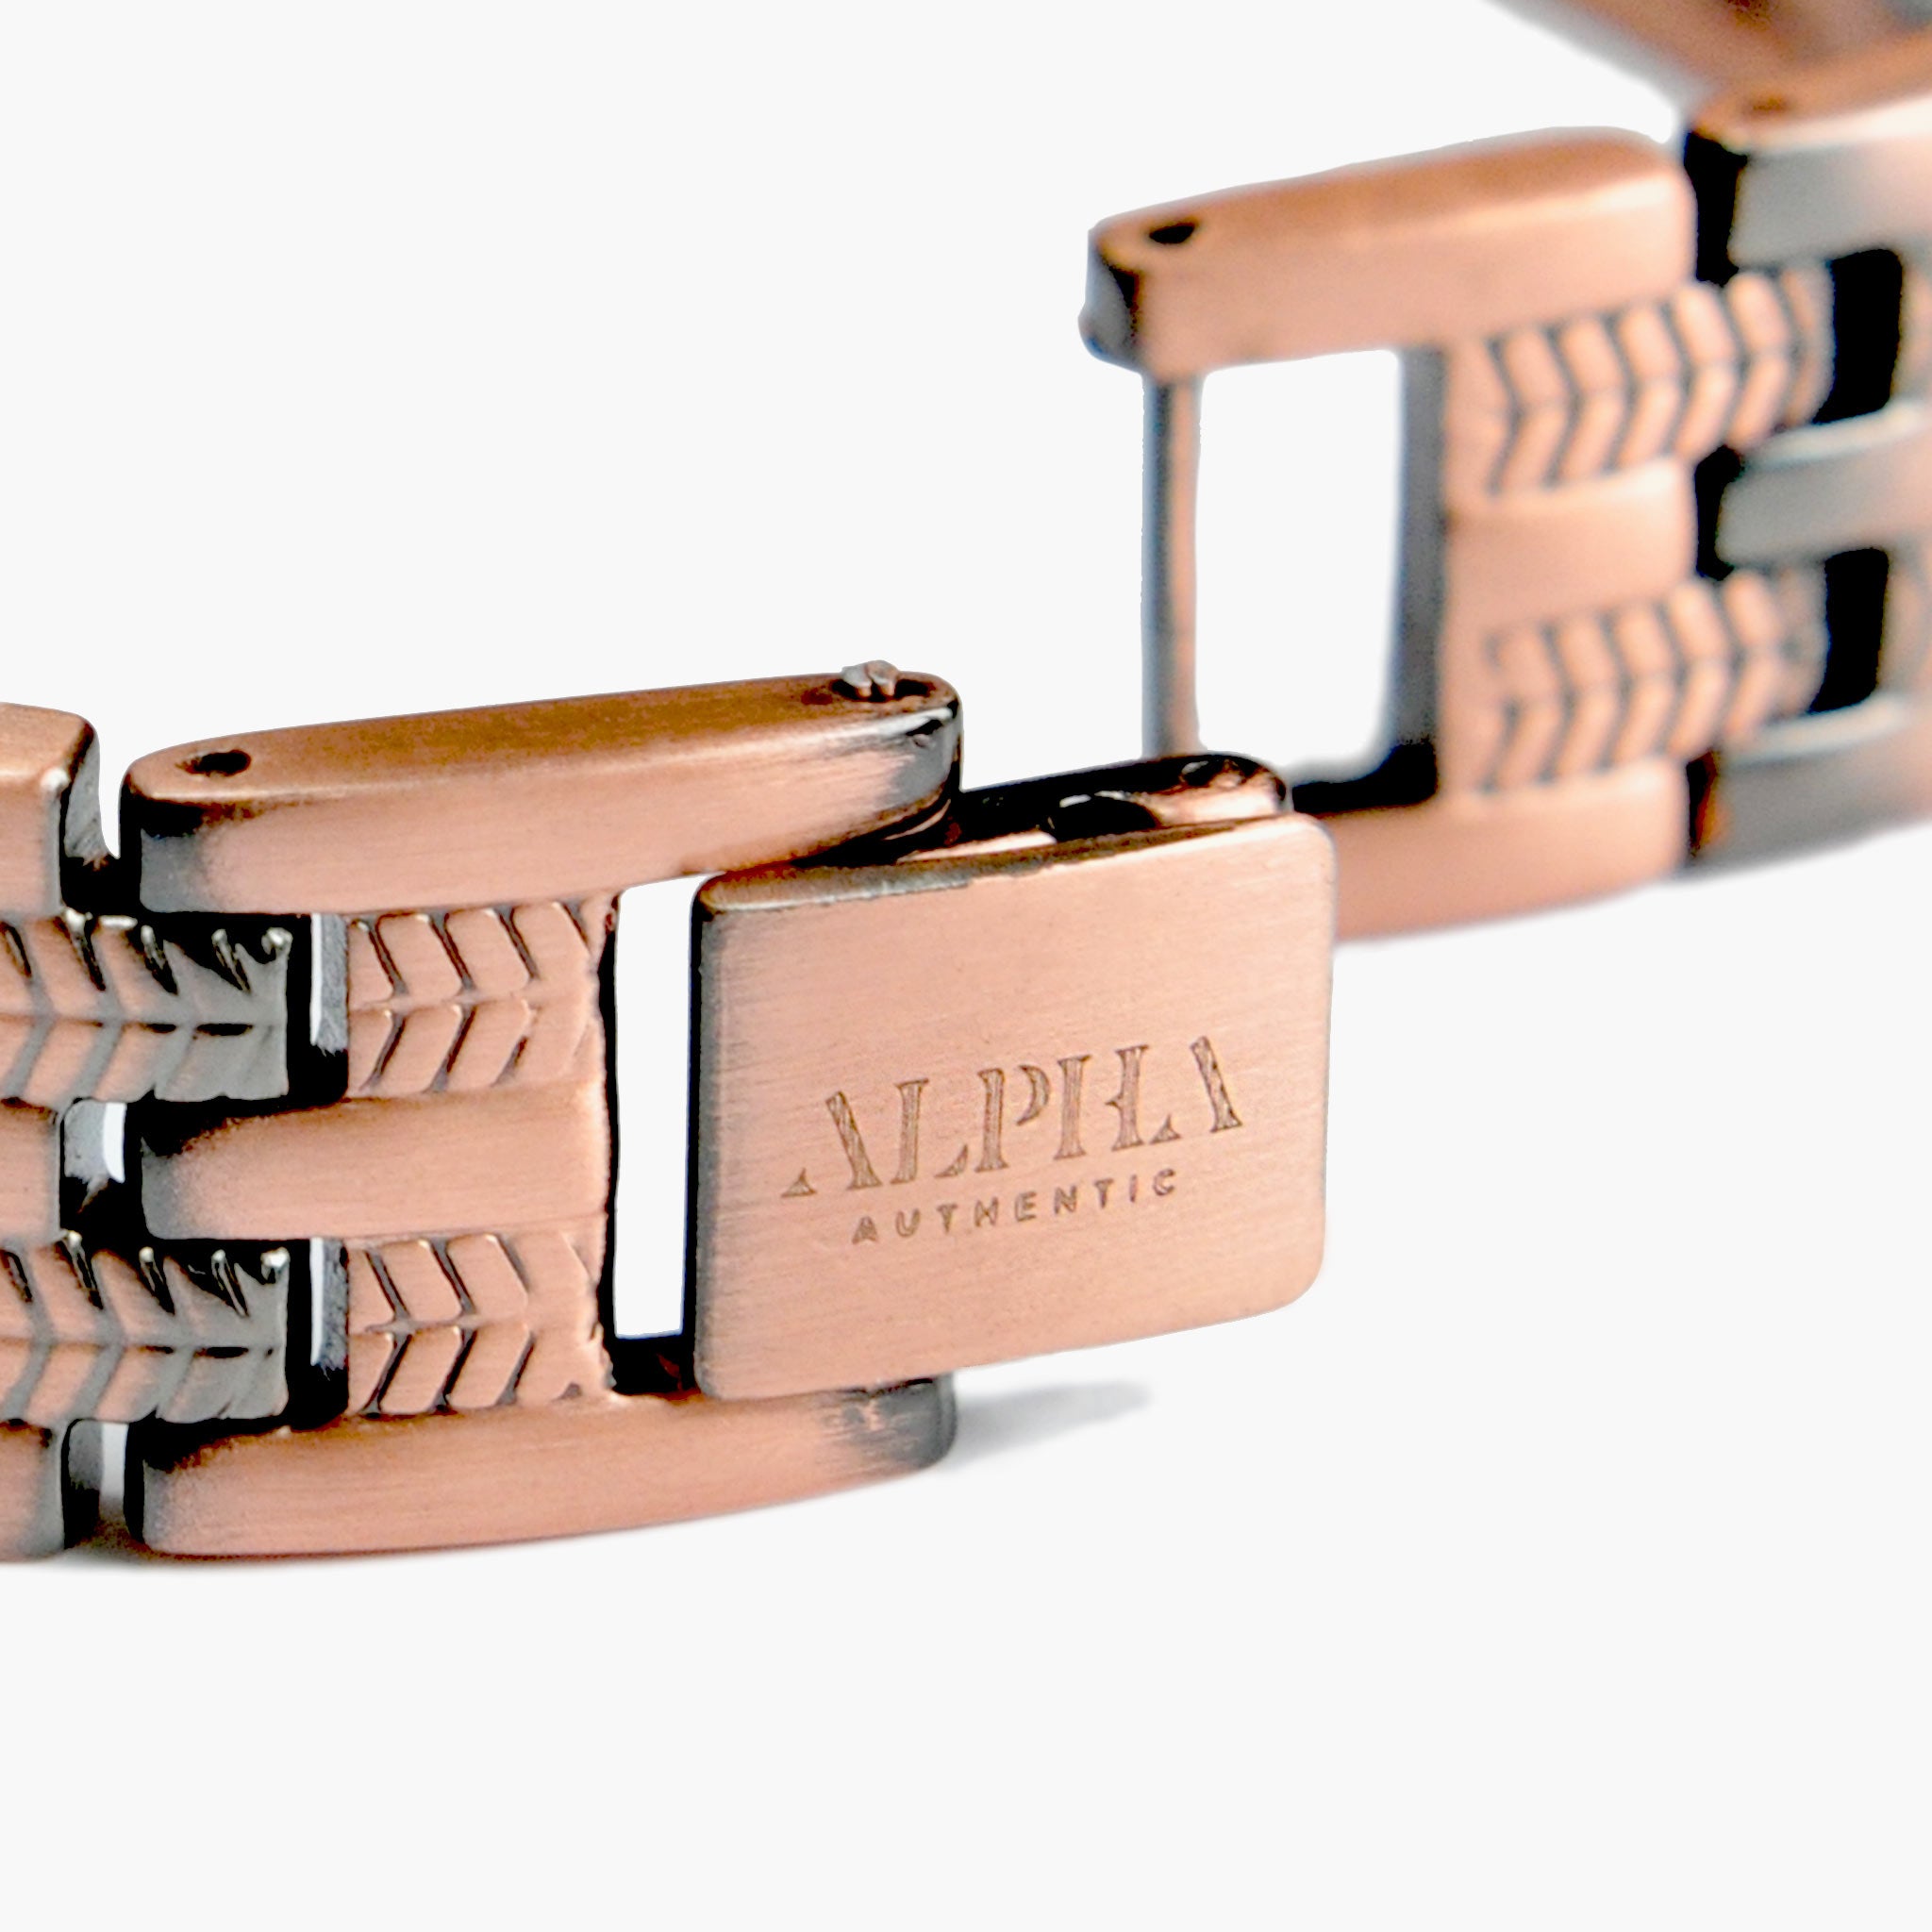 Nova Copper Bracelet | ALPHA™ mens